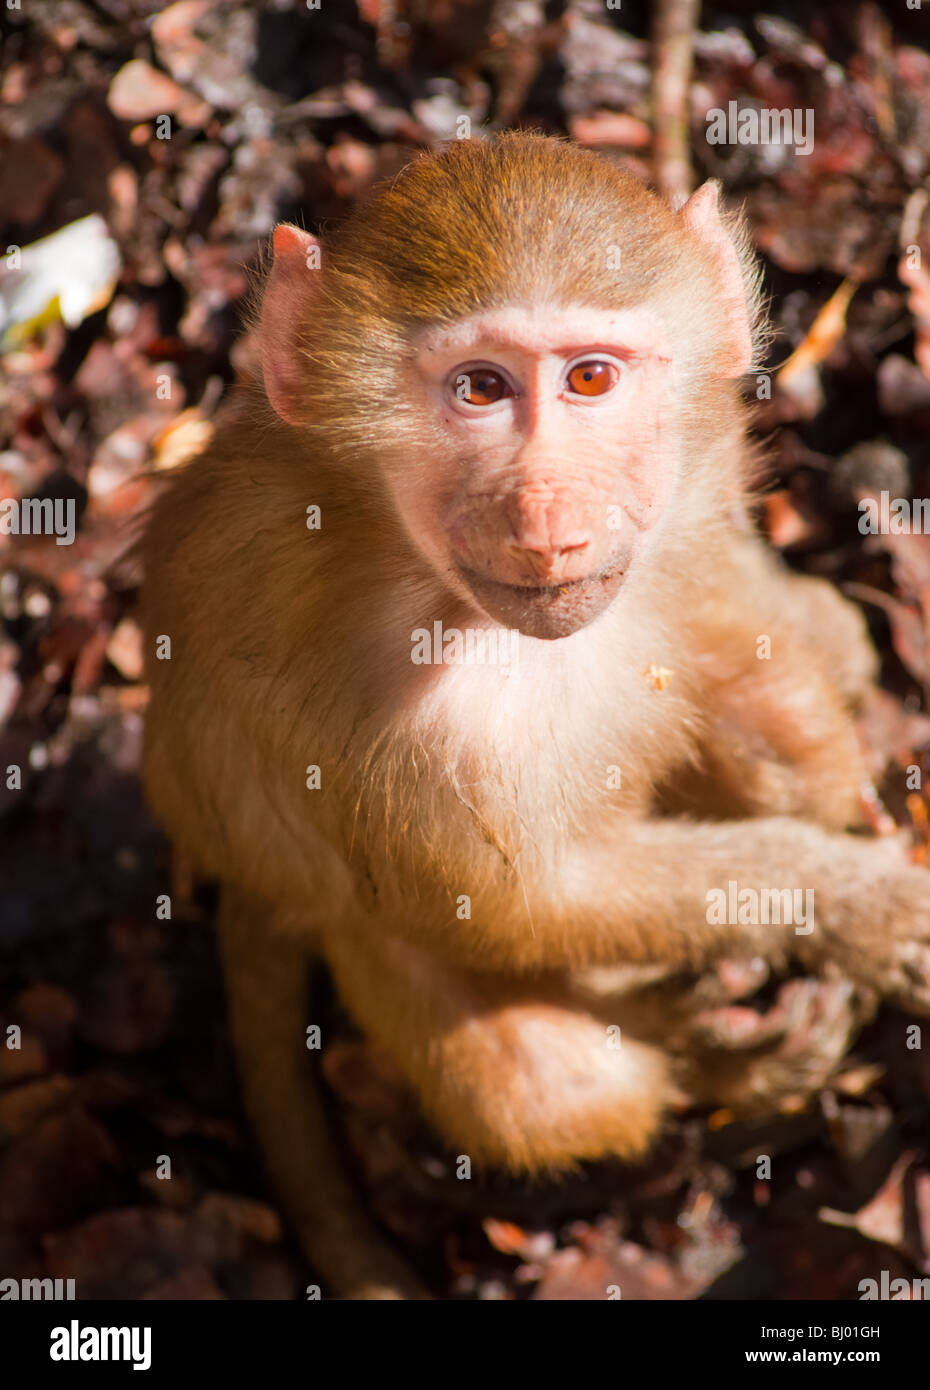 Young Hamadryas baboon looks up earnestly. Stock Photo